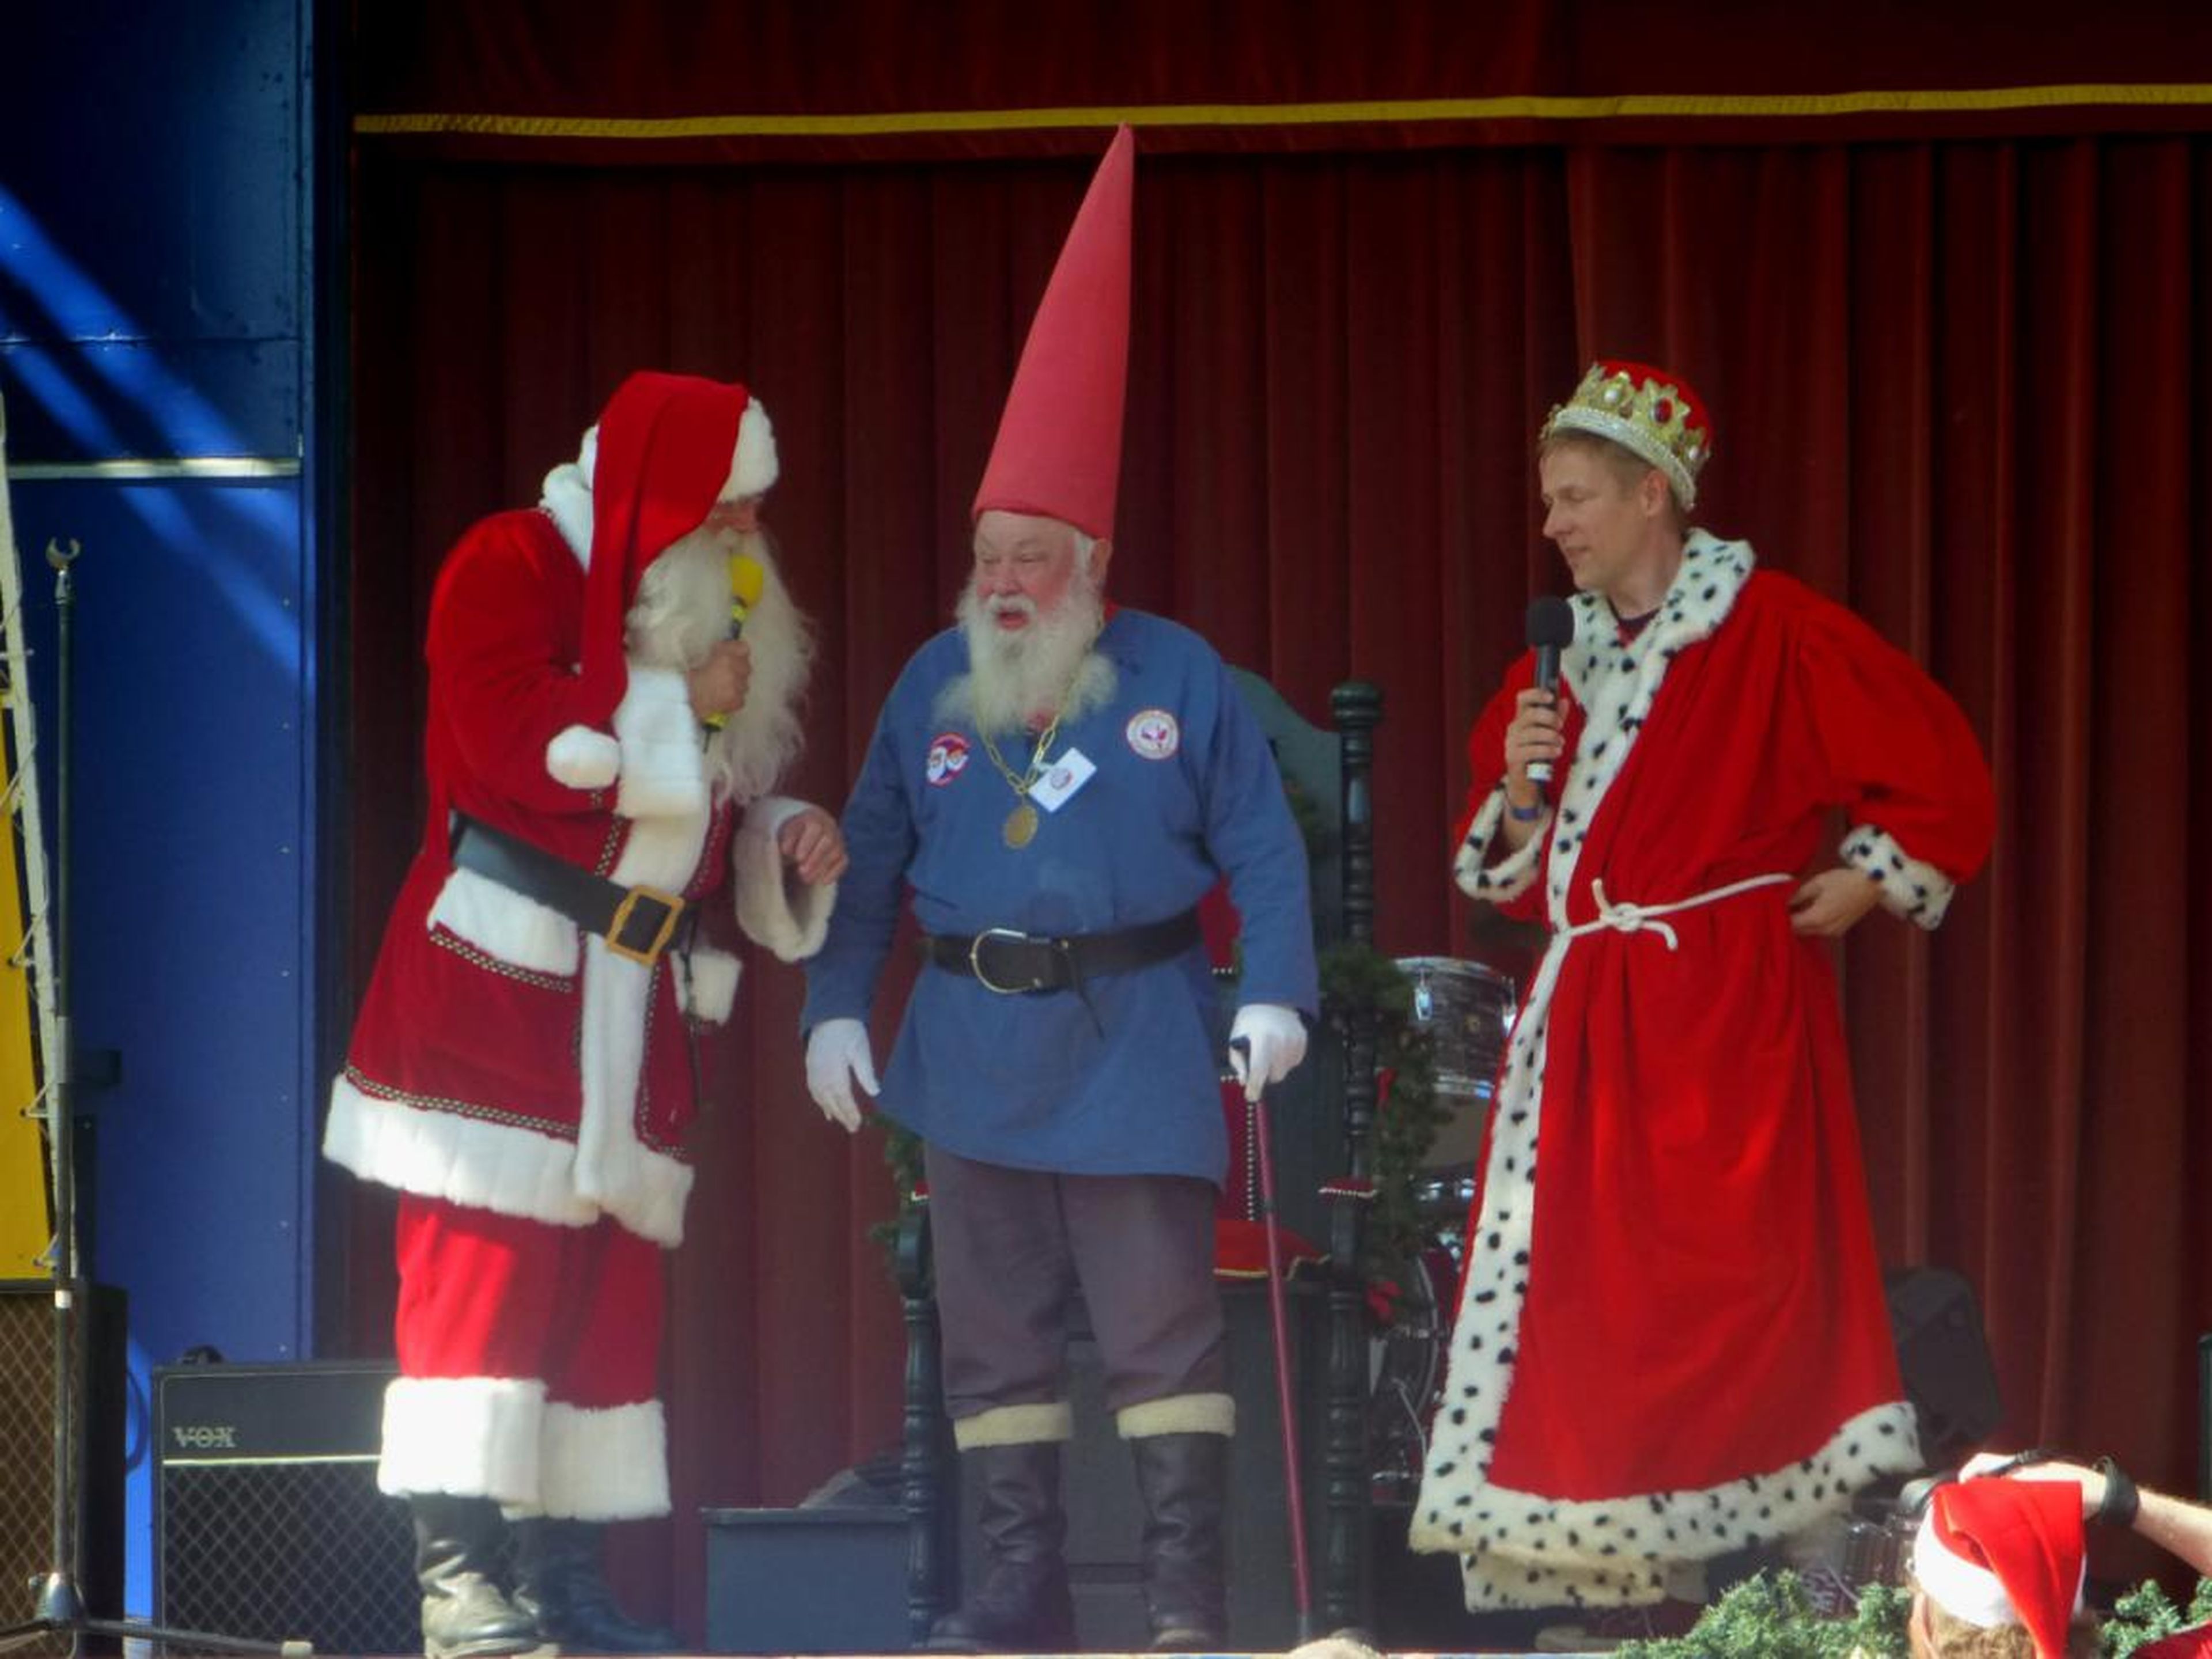 Julenissen as Norway representative at the World Santa Claus Congress.